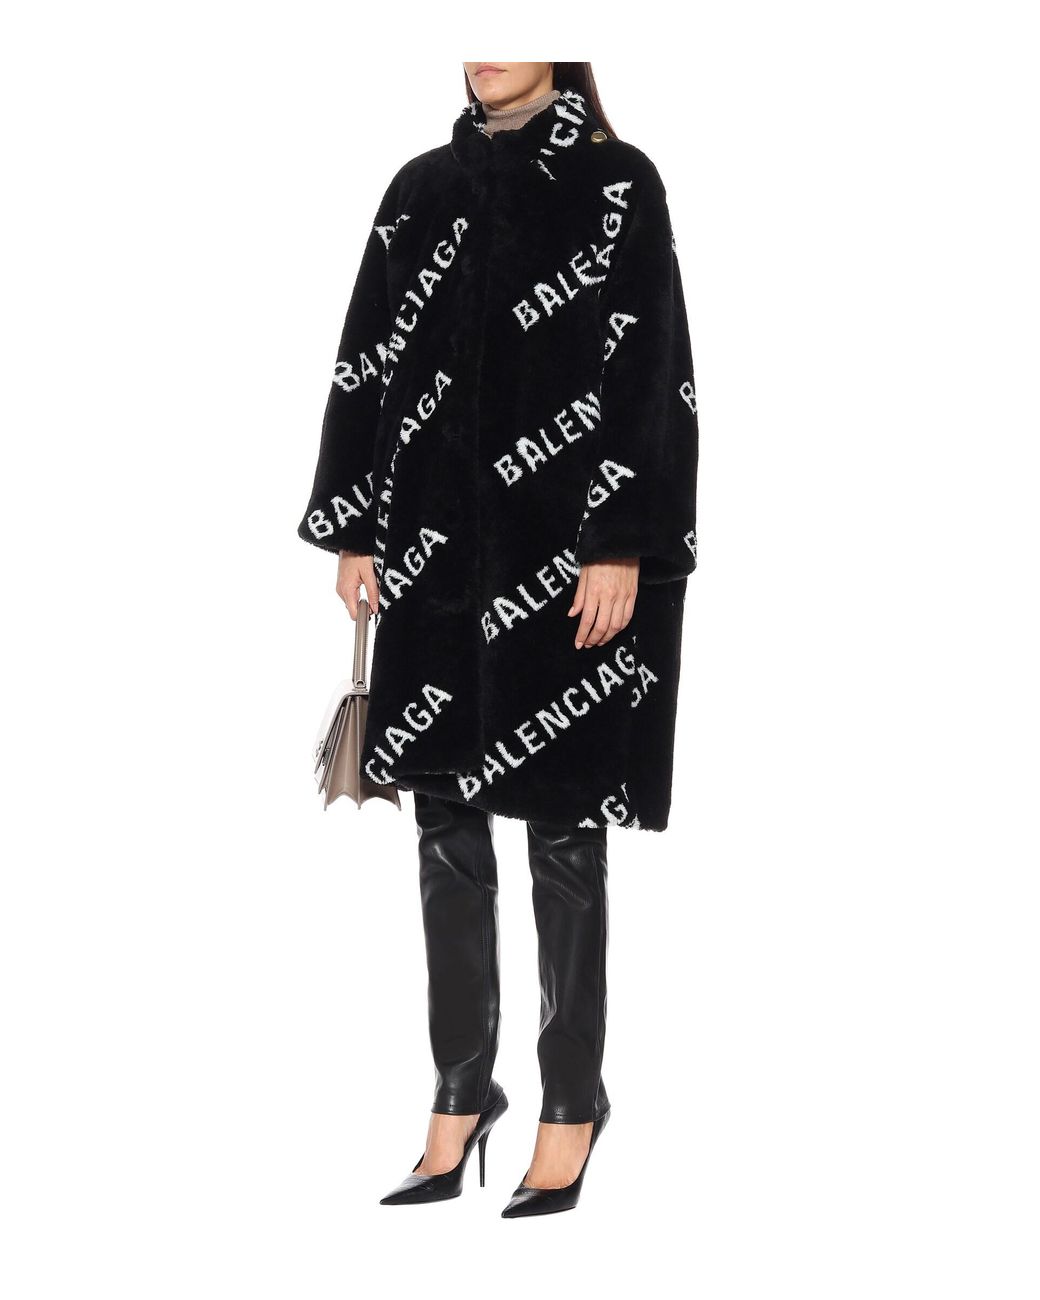 Balenciaga Logo Faux Fur Coat in Black / White (Black) | Lyst